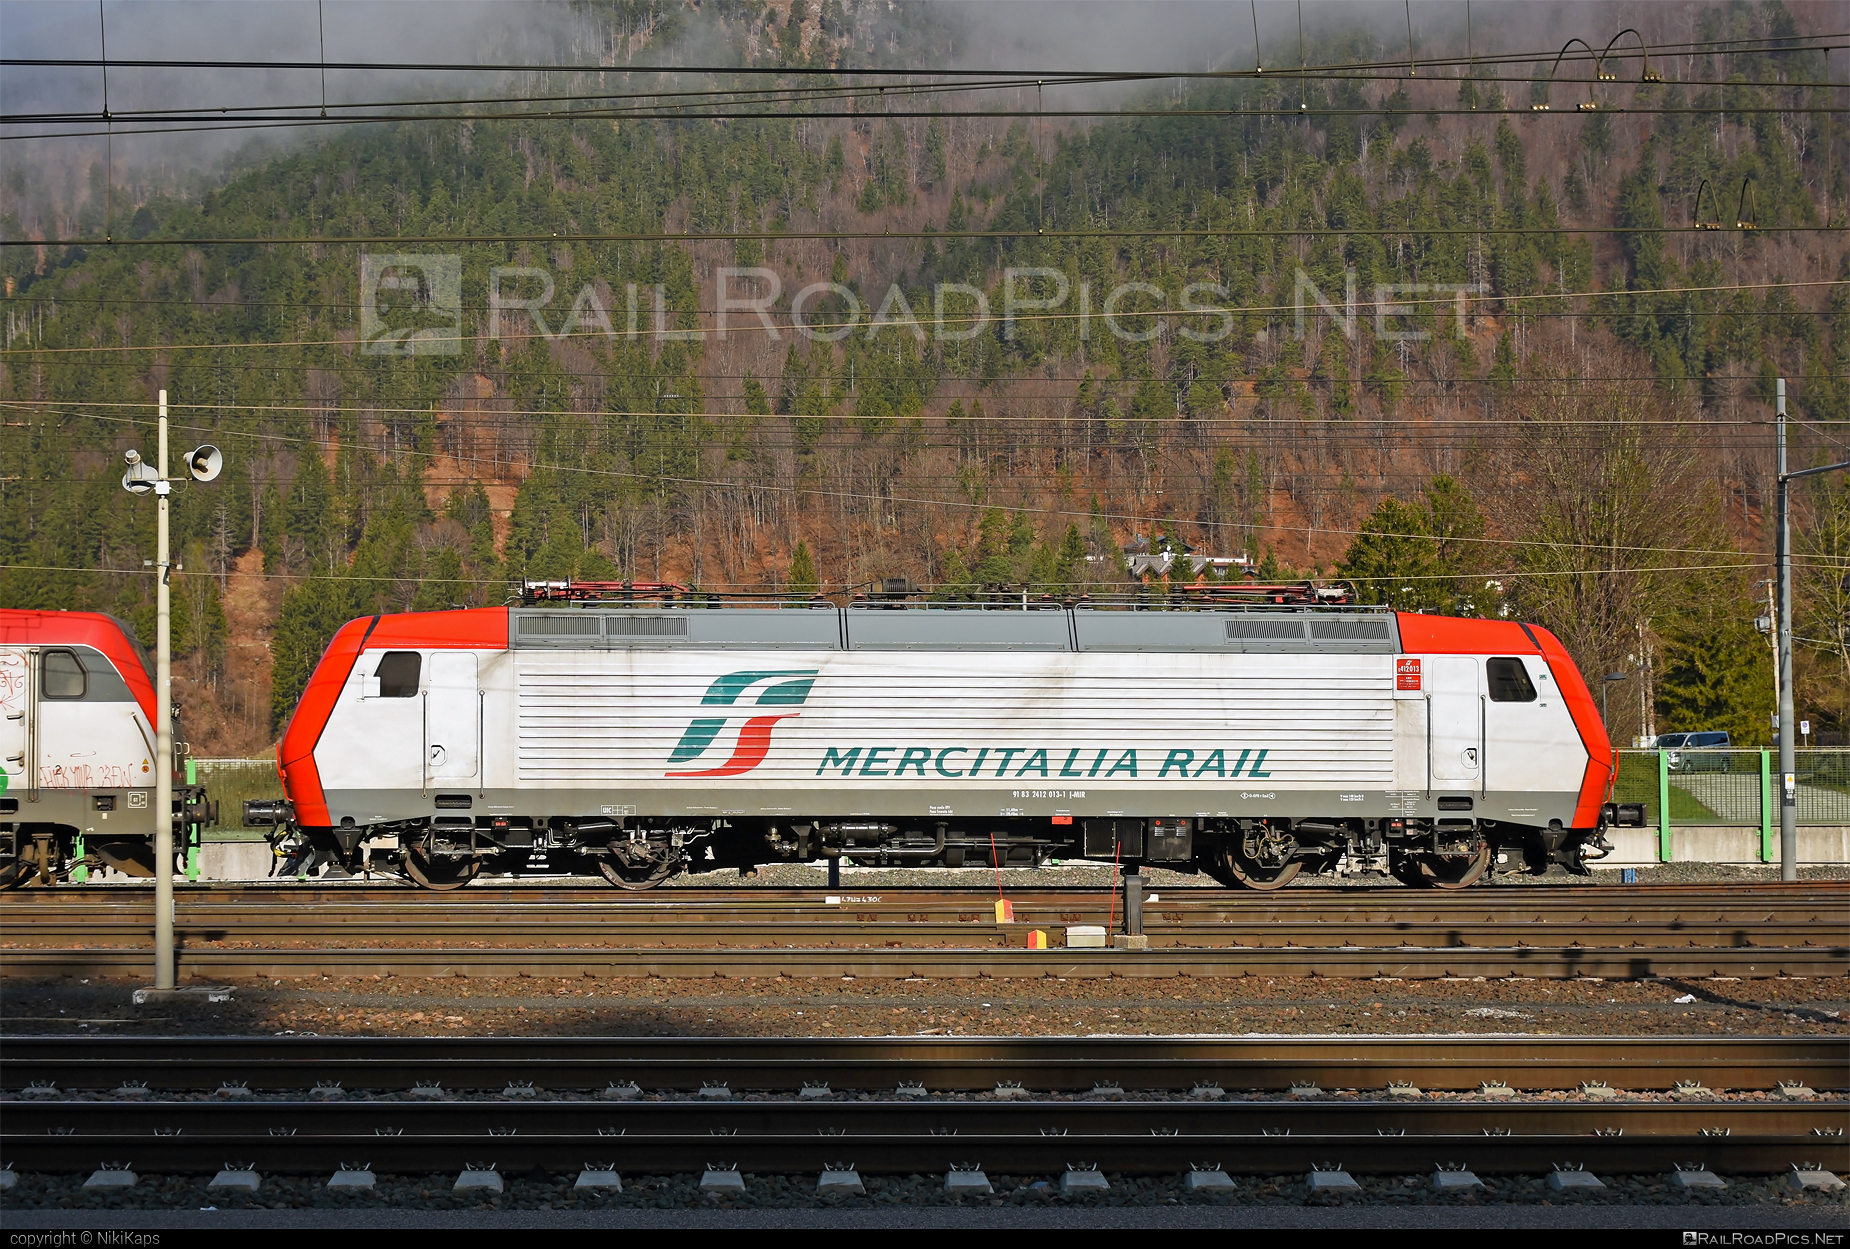 FS Class E.412 - E412 013 operated by Mercitalia Rail S.r.l. #e412 #ferroviedellostato #fs #fsClassE412 #fsitaliane #mercitalia